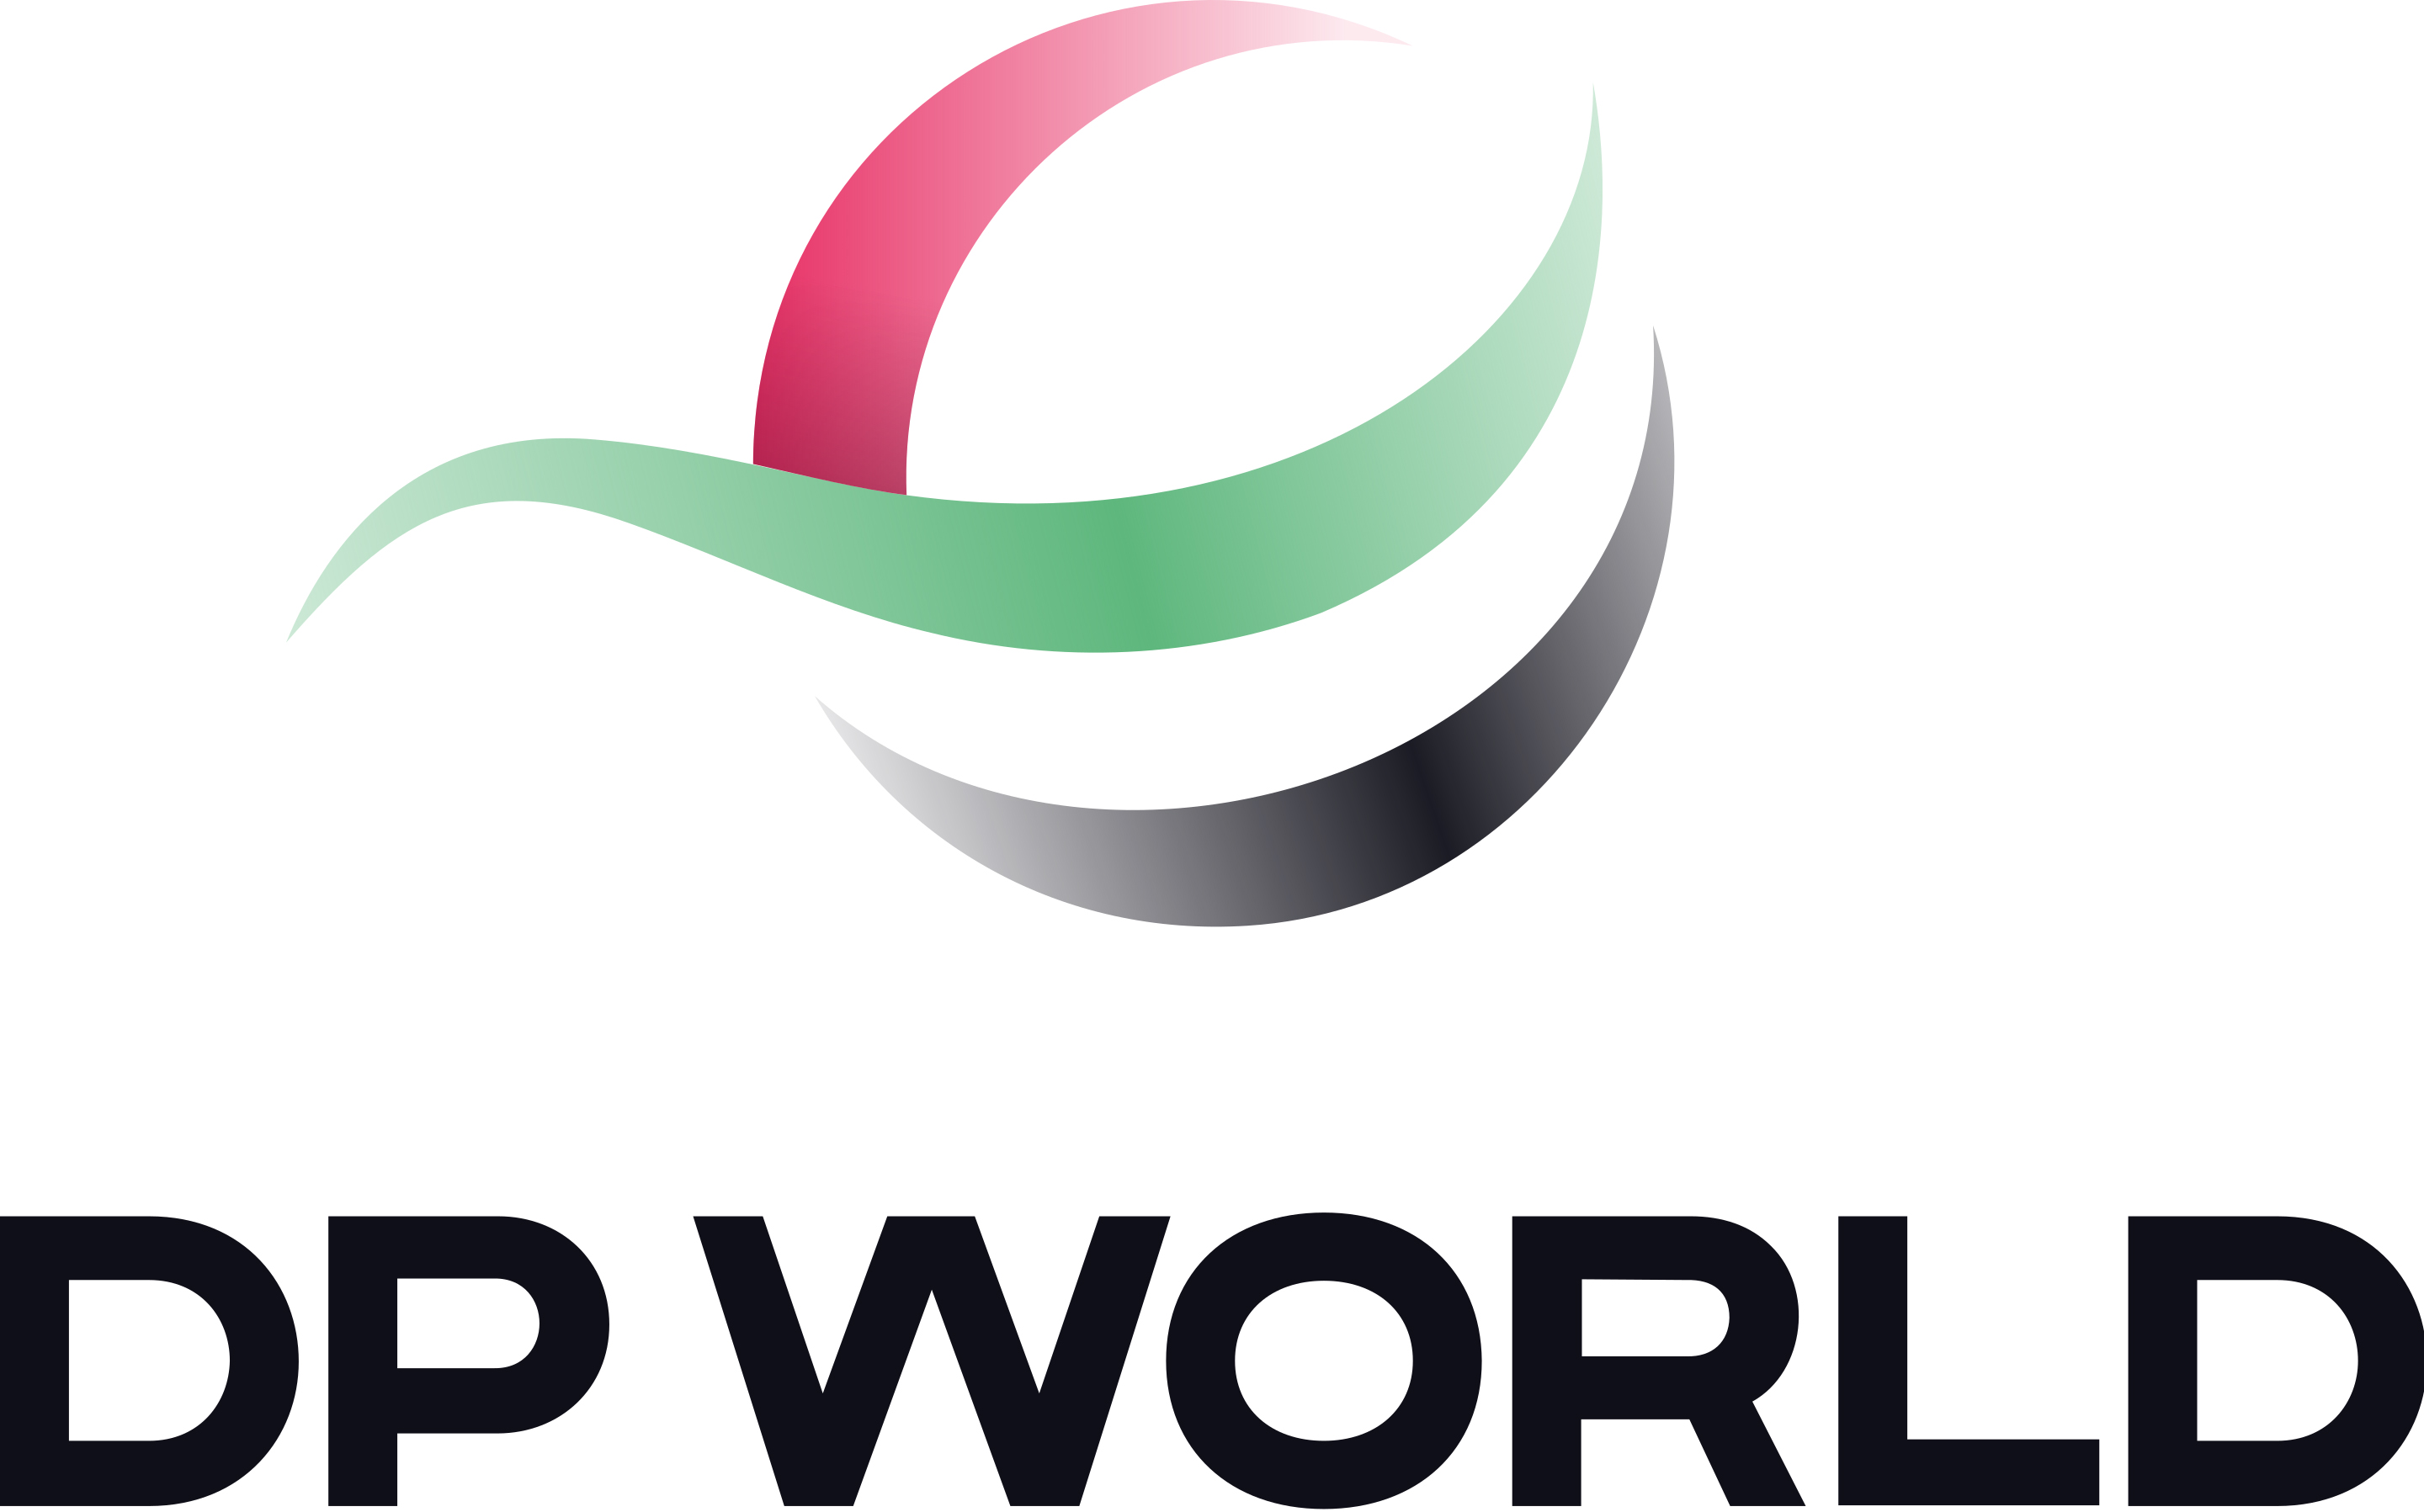 dp world tour logo